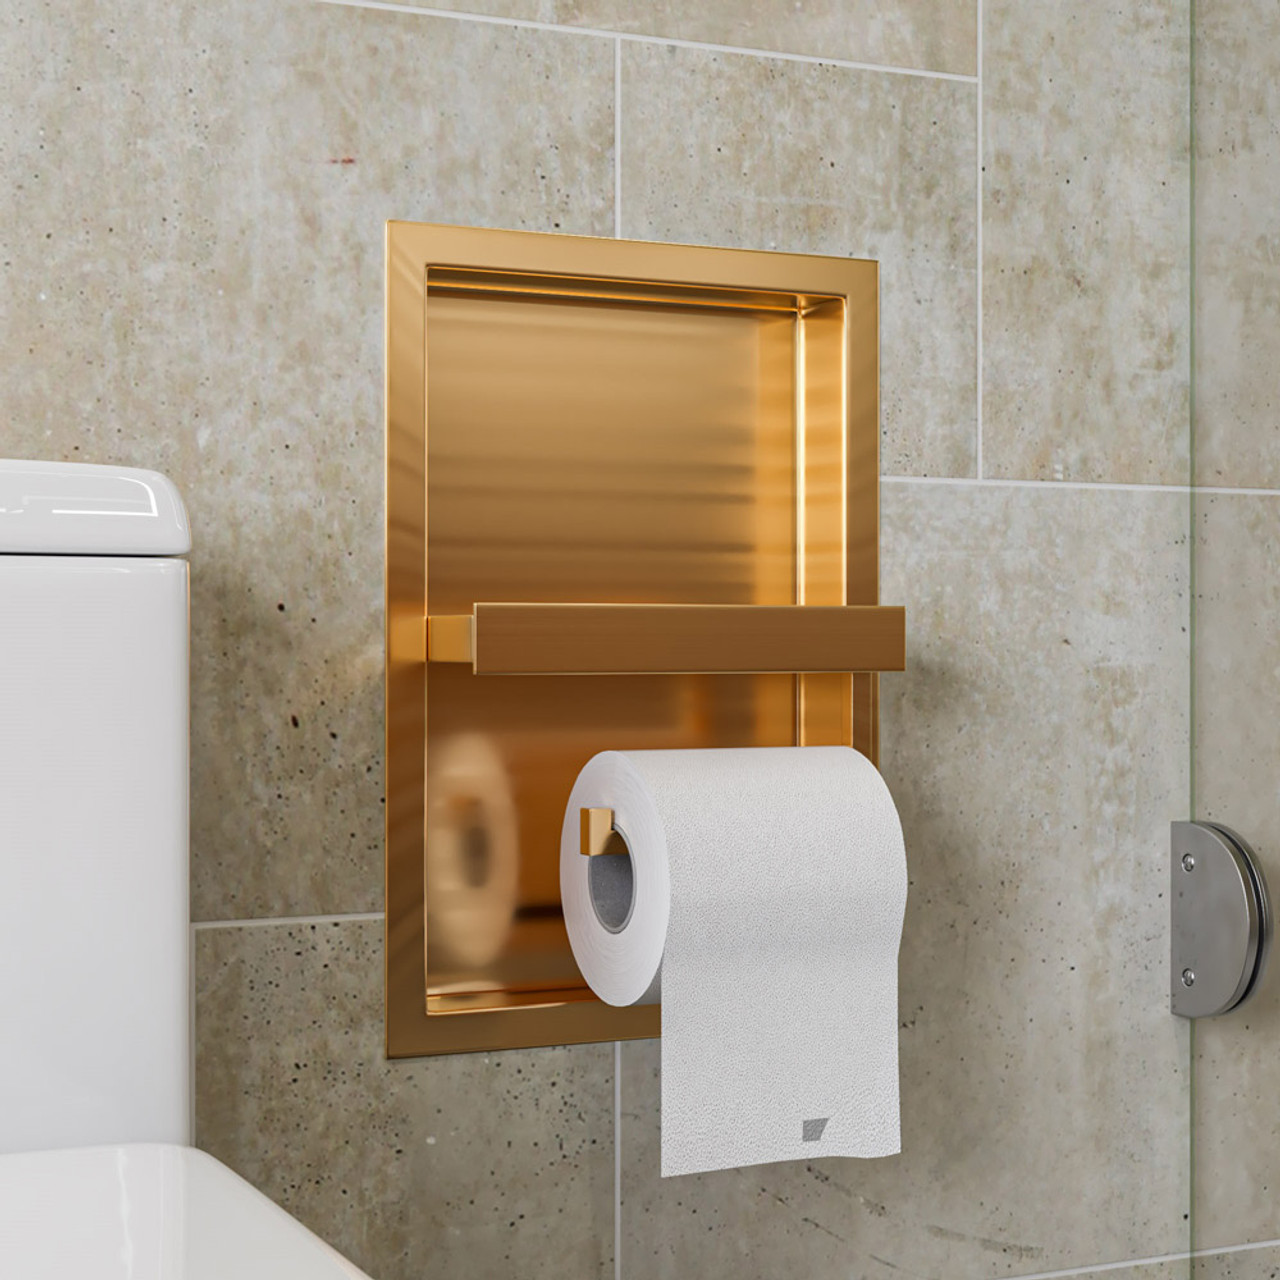 Capri Mega Roll Toilet Paper Holder in Polished Chrome